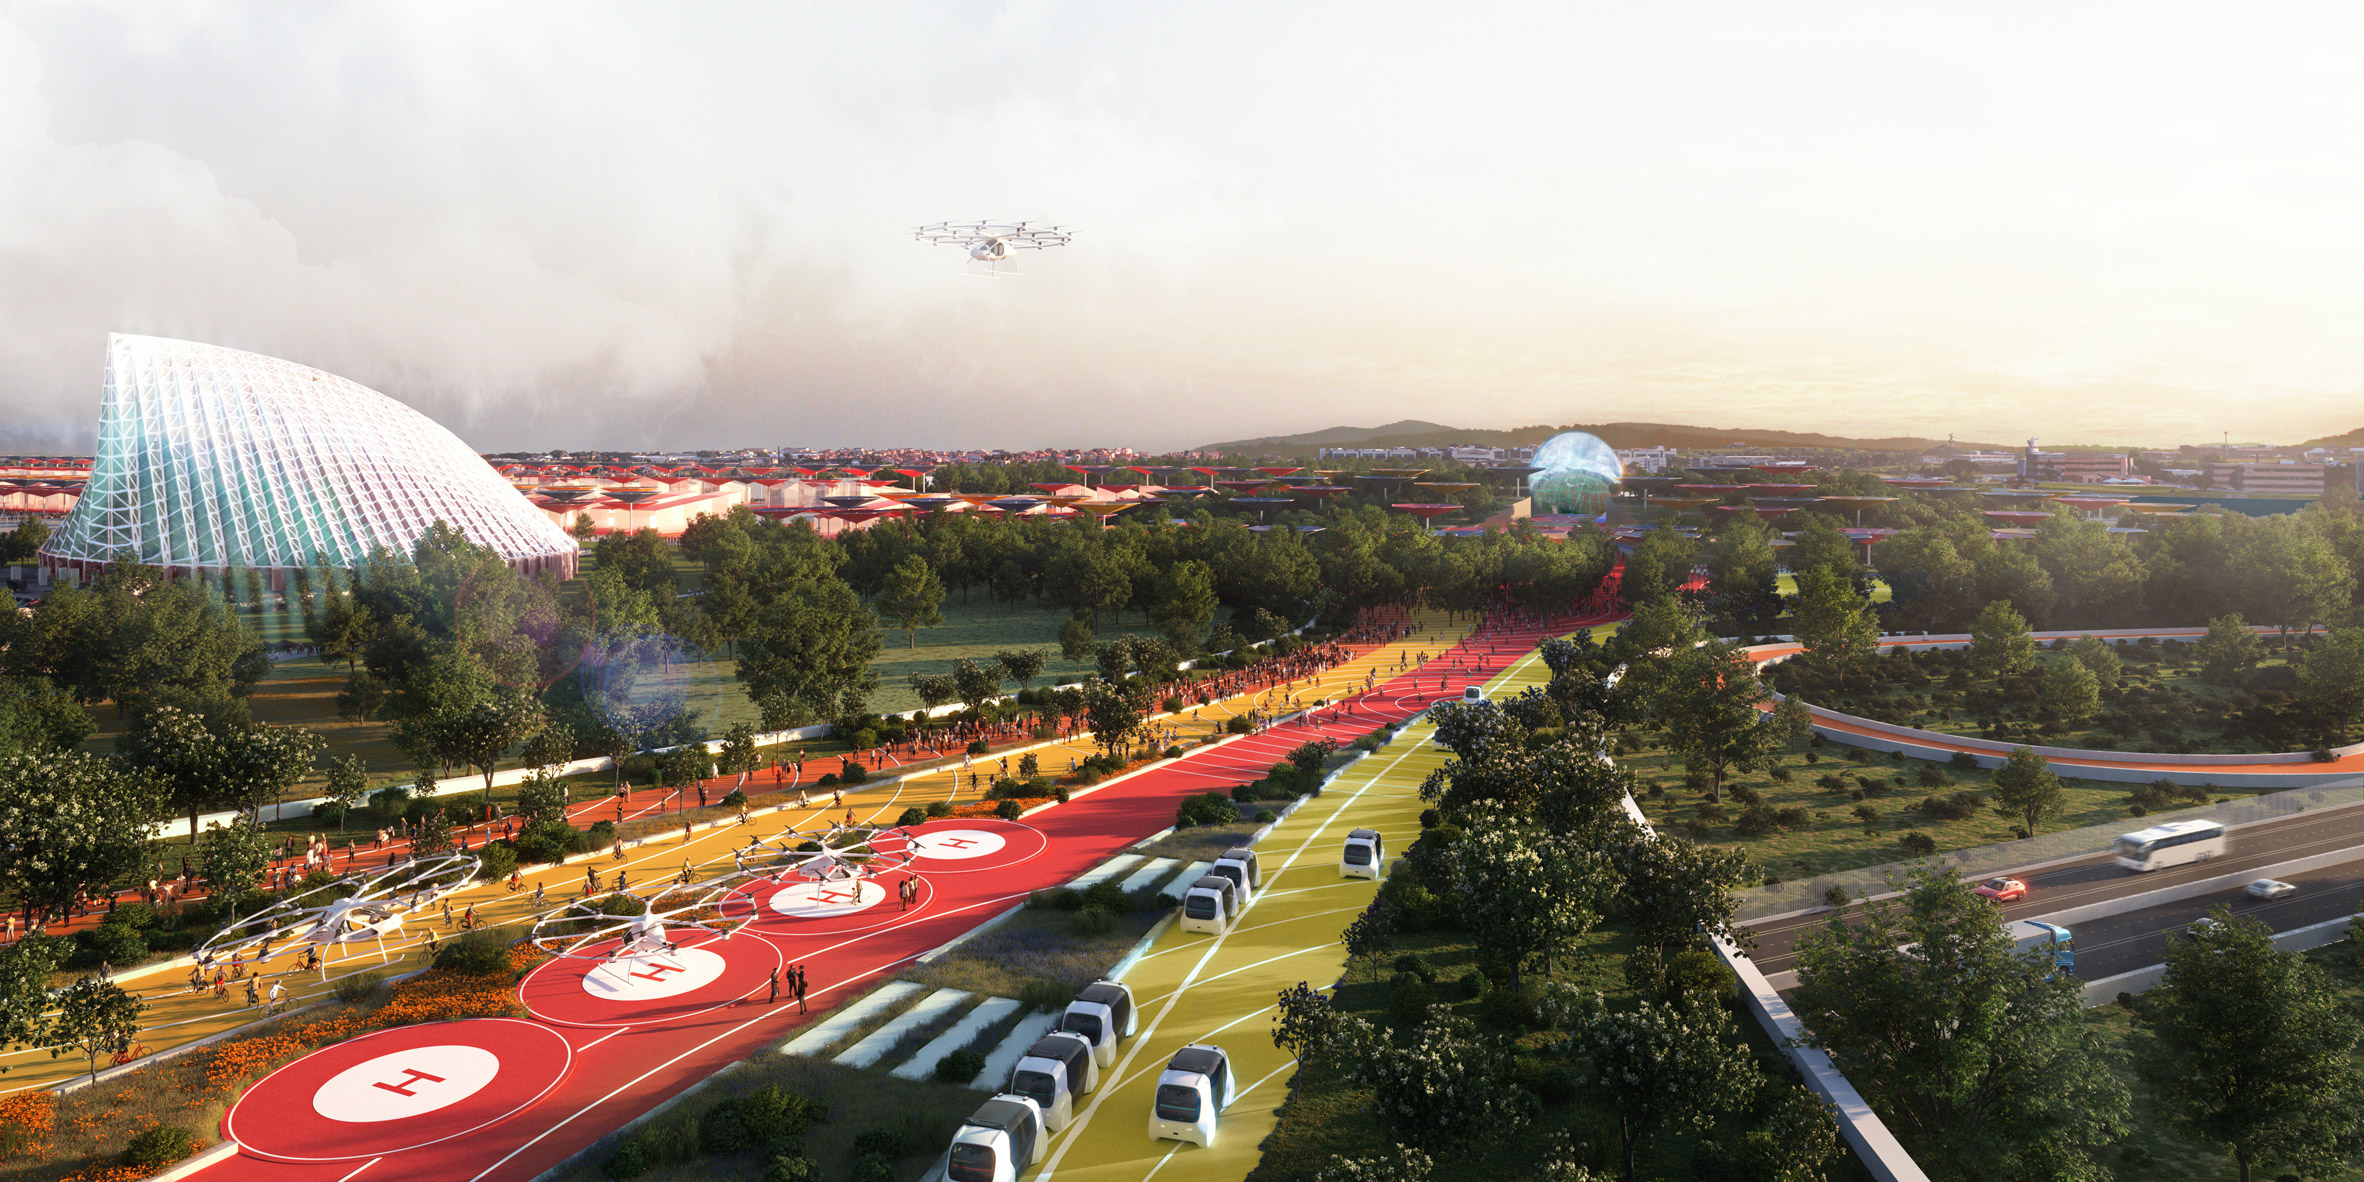 Rome masterplan featuring Santiago Calatrava's Vela sports complex